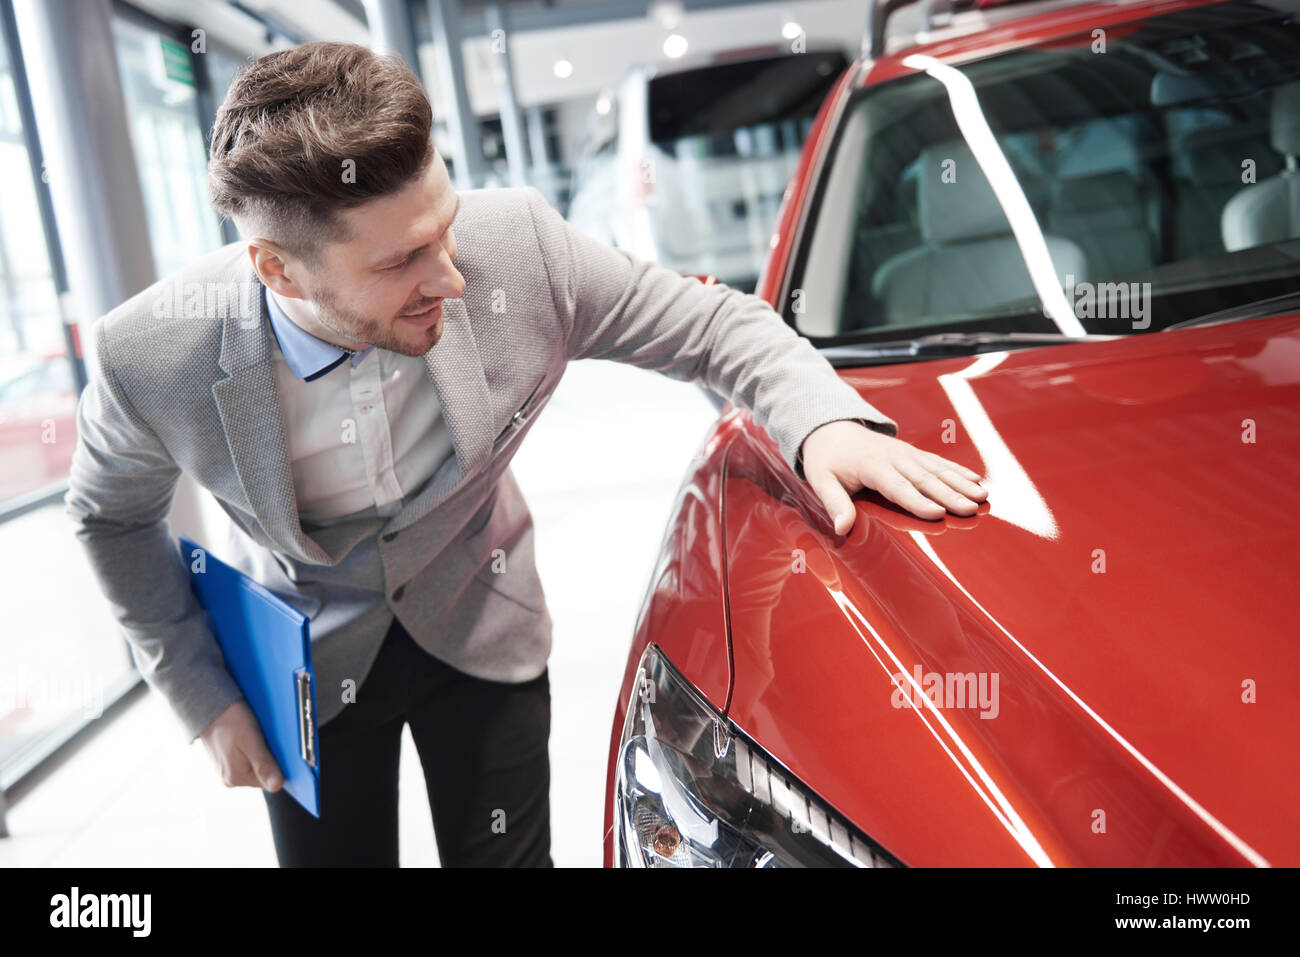 Car salesman examining vehicle before selling Stock Photo